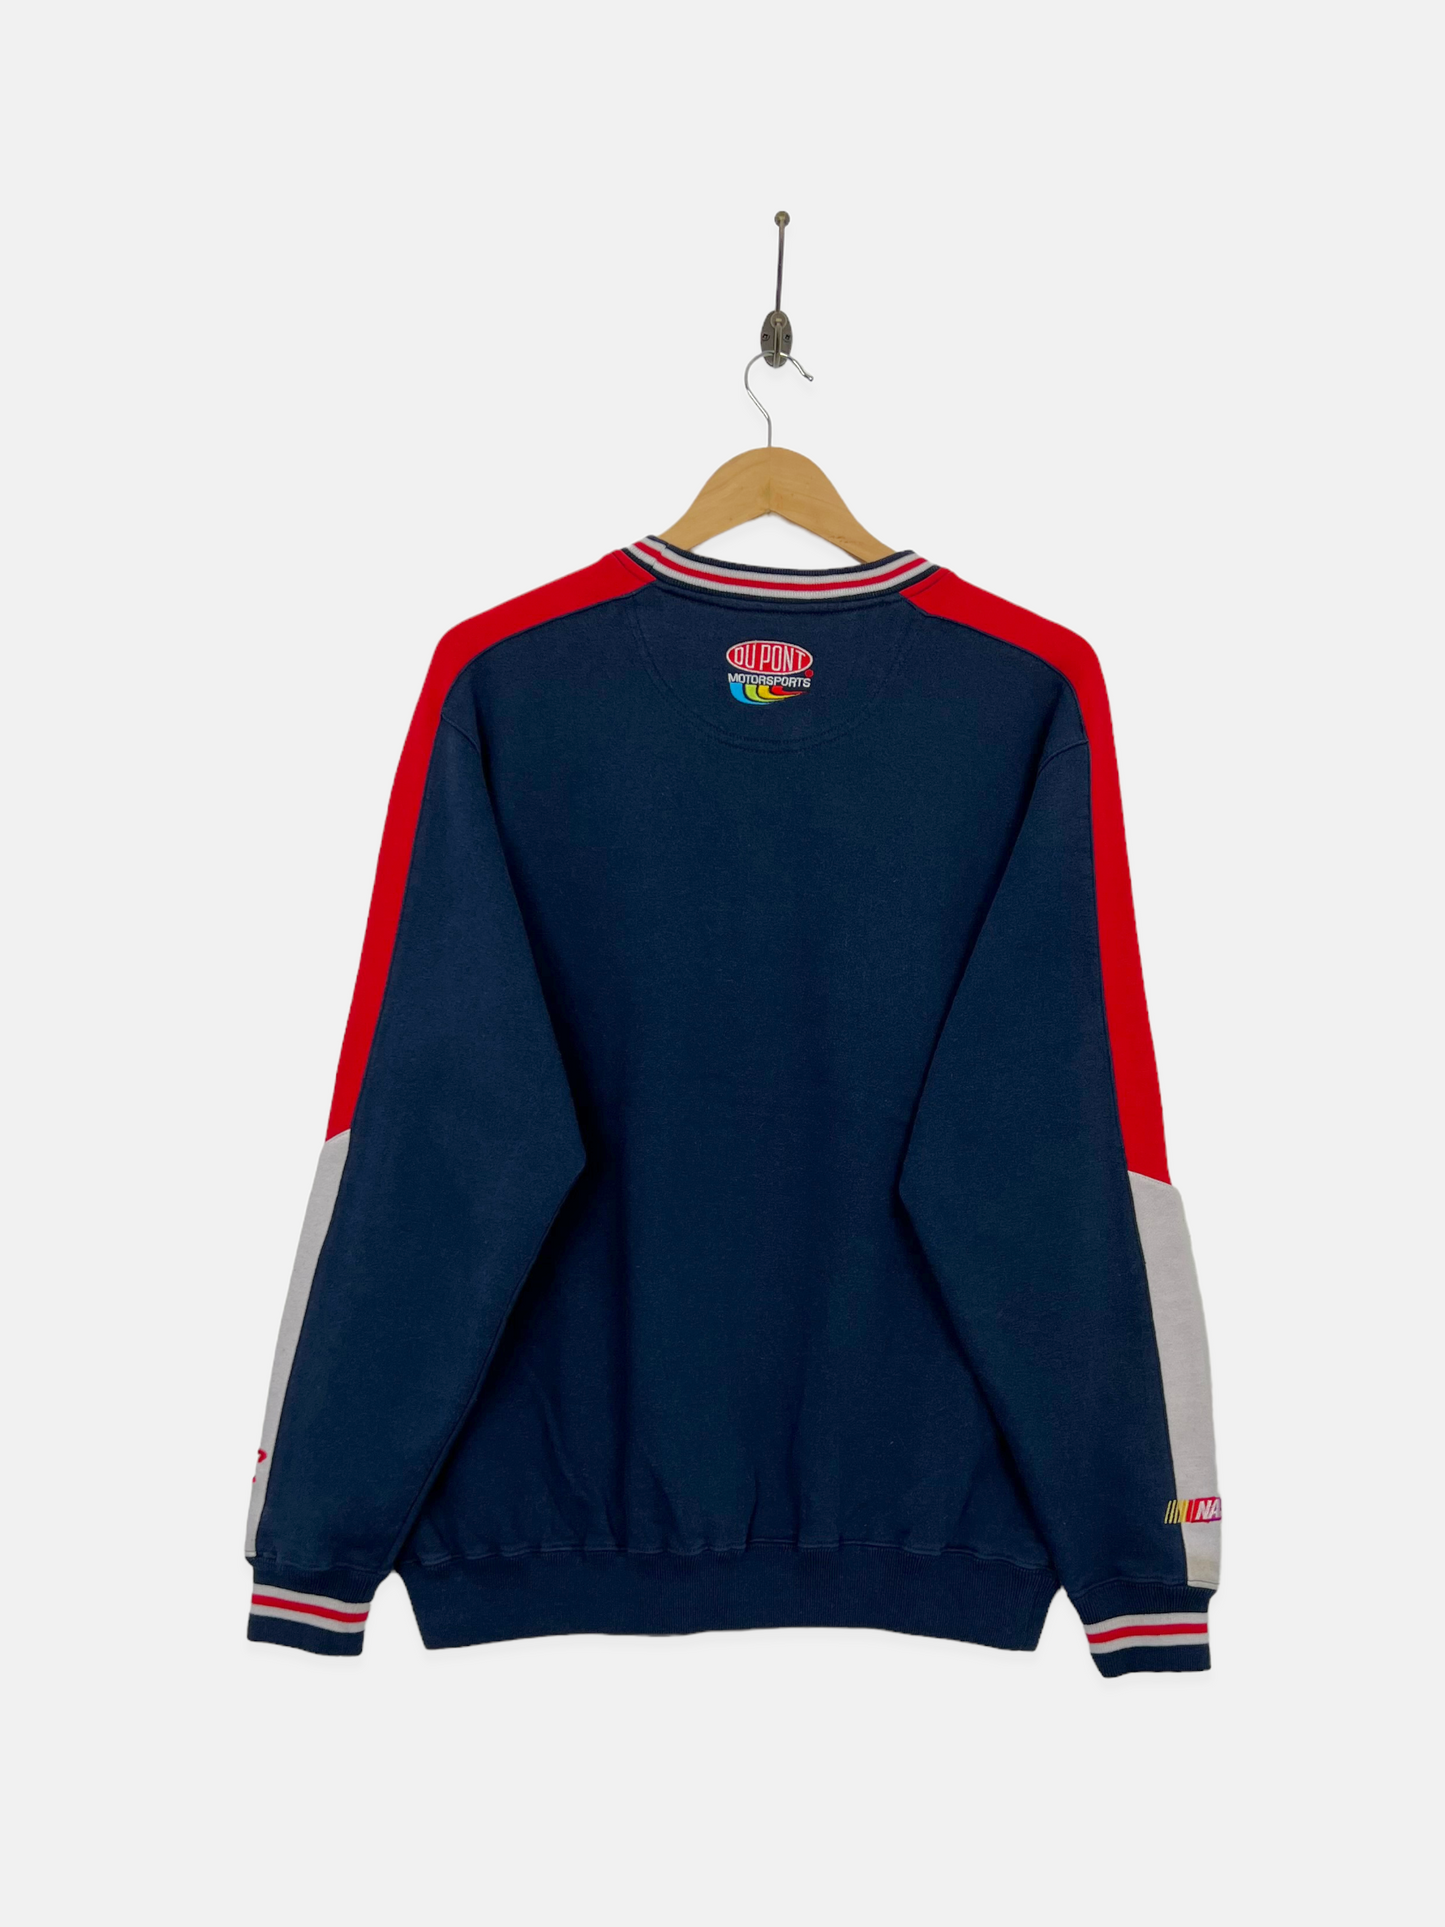 90's NASCAR Jeff Gordon #24 Embroidered Vintage Sweatshirt Size M